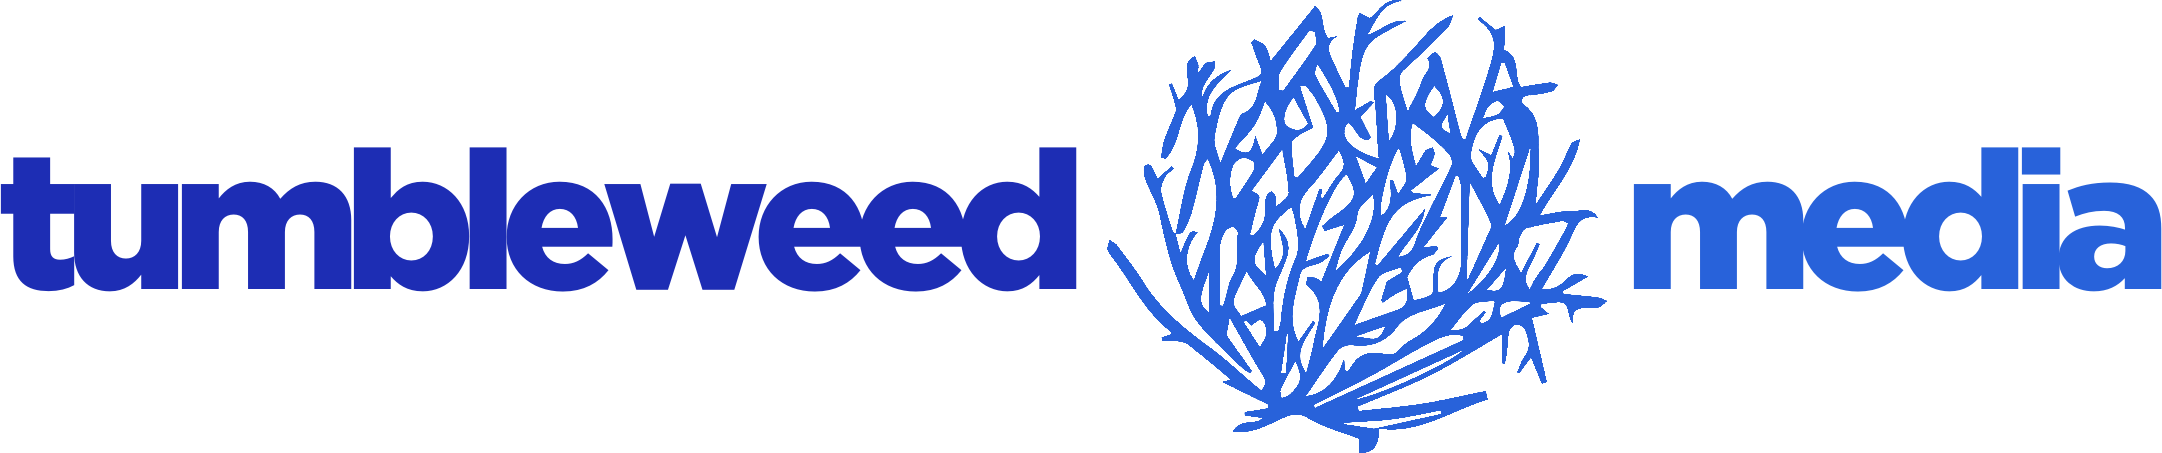 Tumbleweed Media logo 2003.png